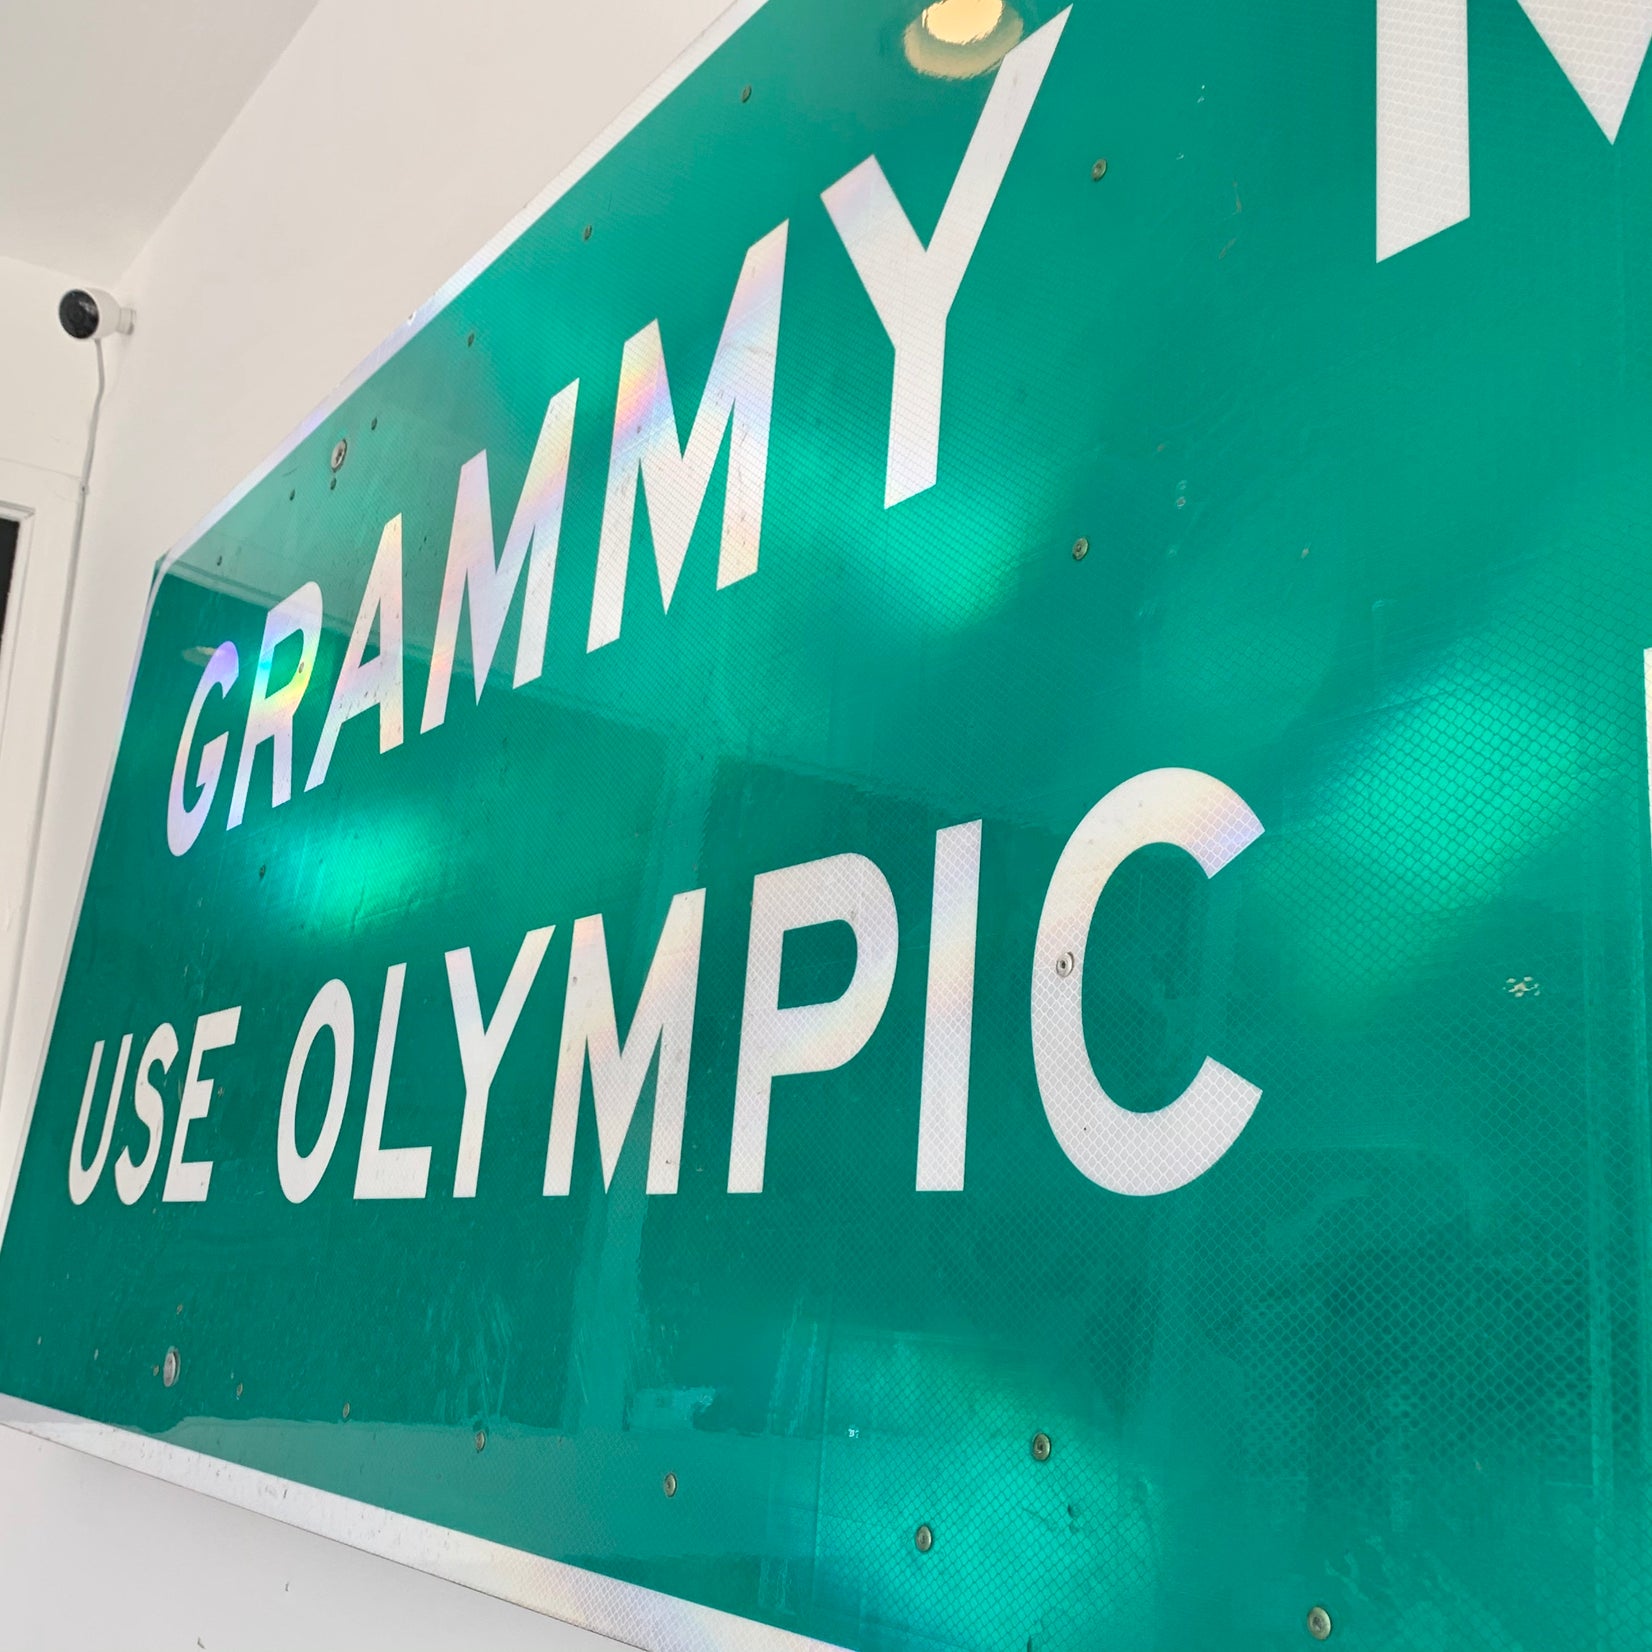 Grammy Museum Los Angeles Freeway Sign